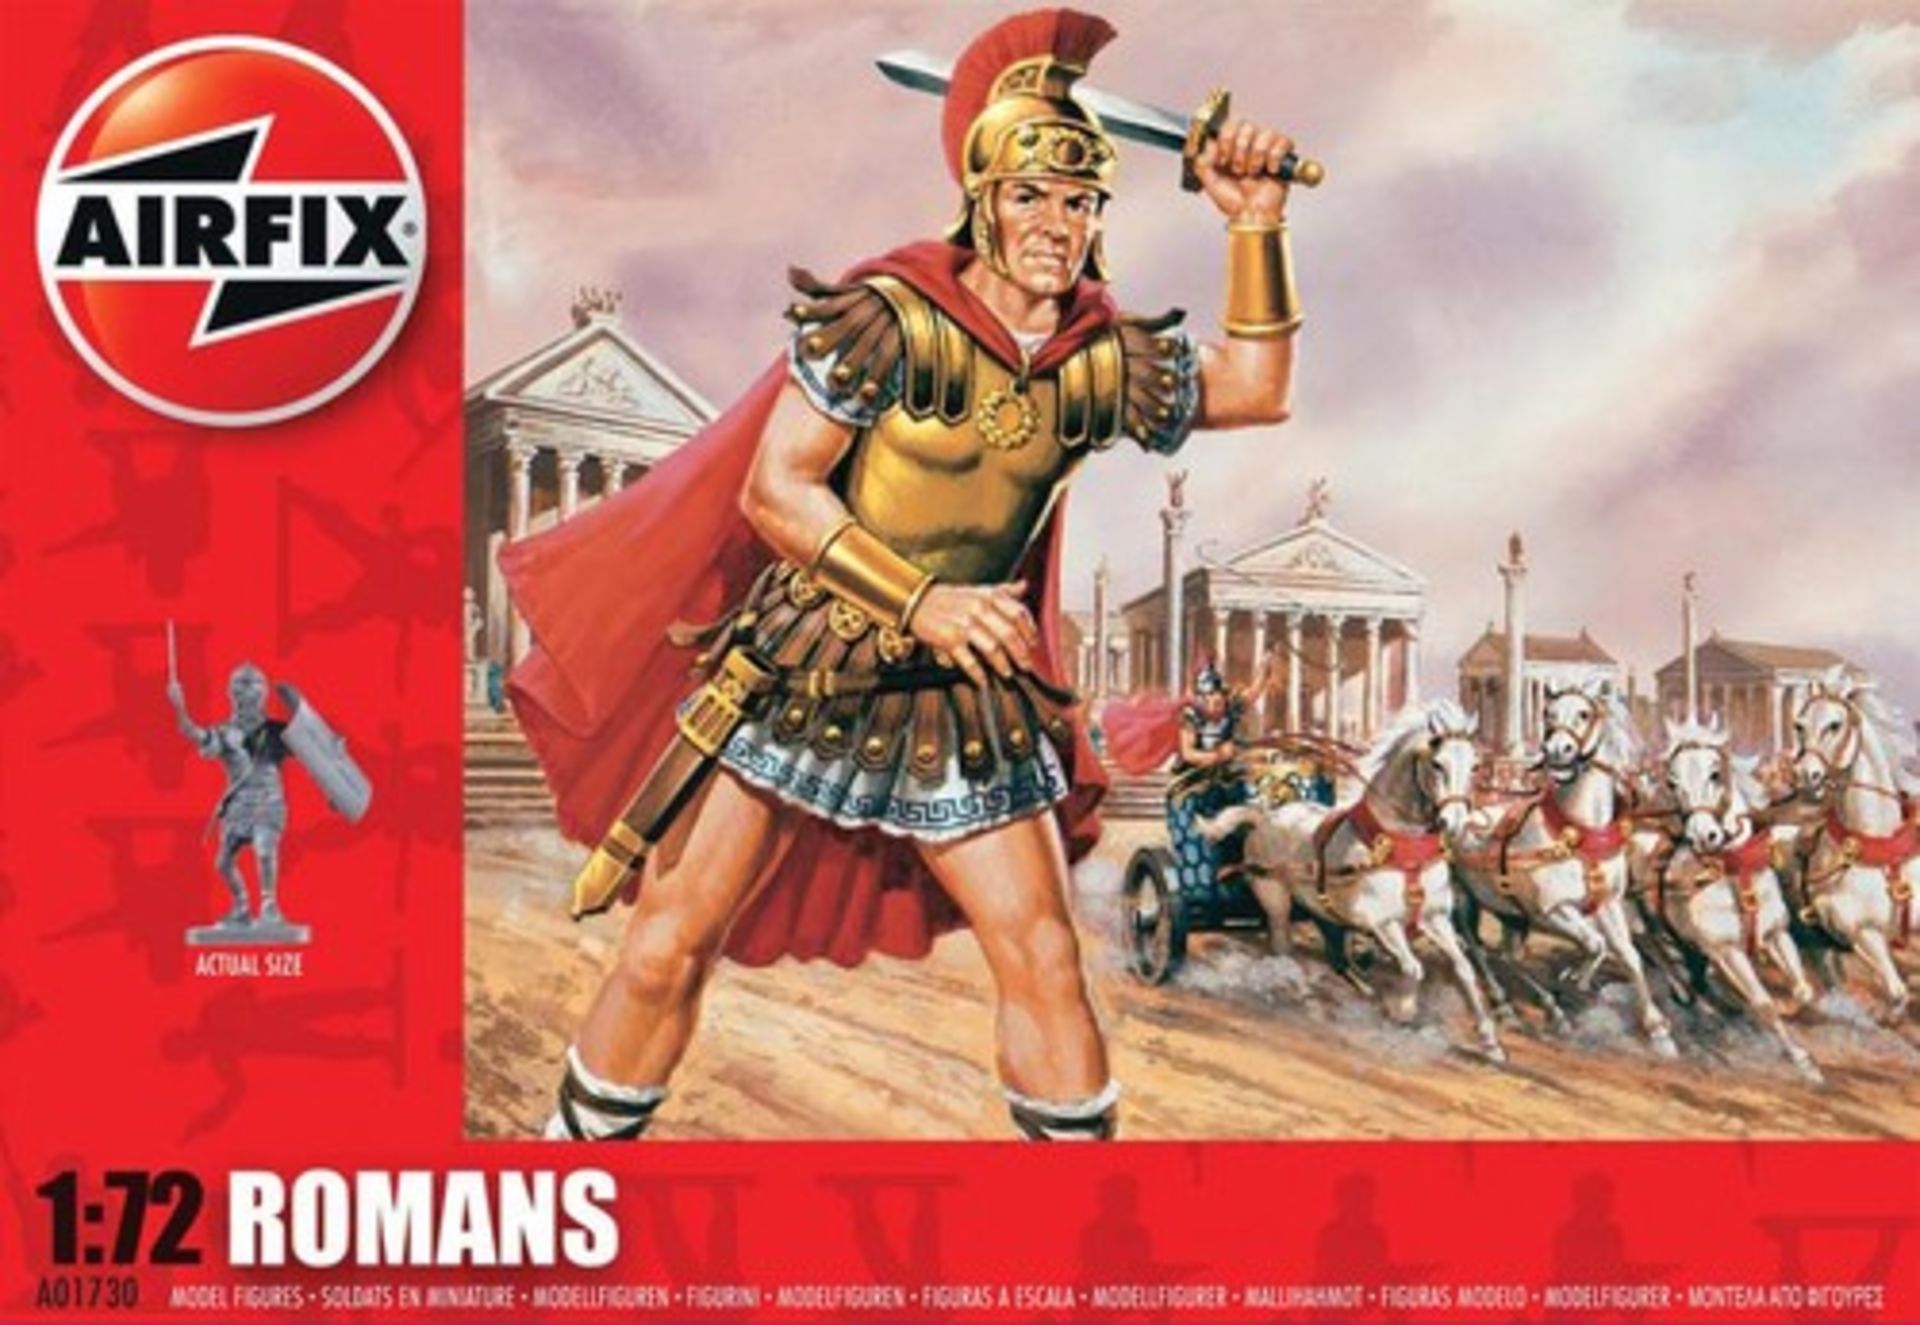 2 X Airfix Model Kits Includes Airfix 1/76 Romans #01730 And Airfix A01734 1:72 Scale Ancient